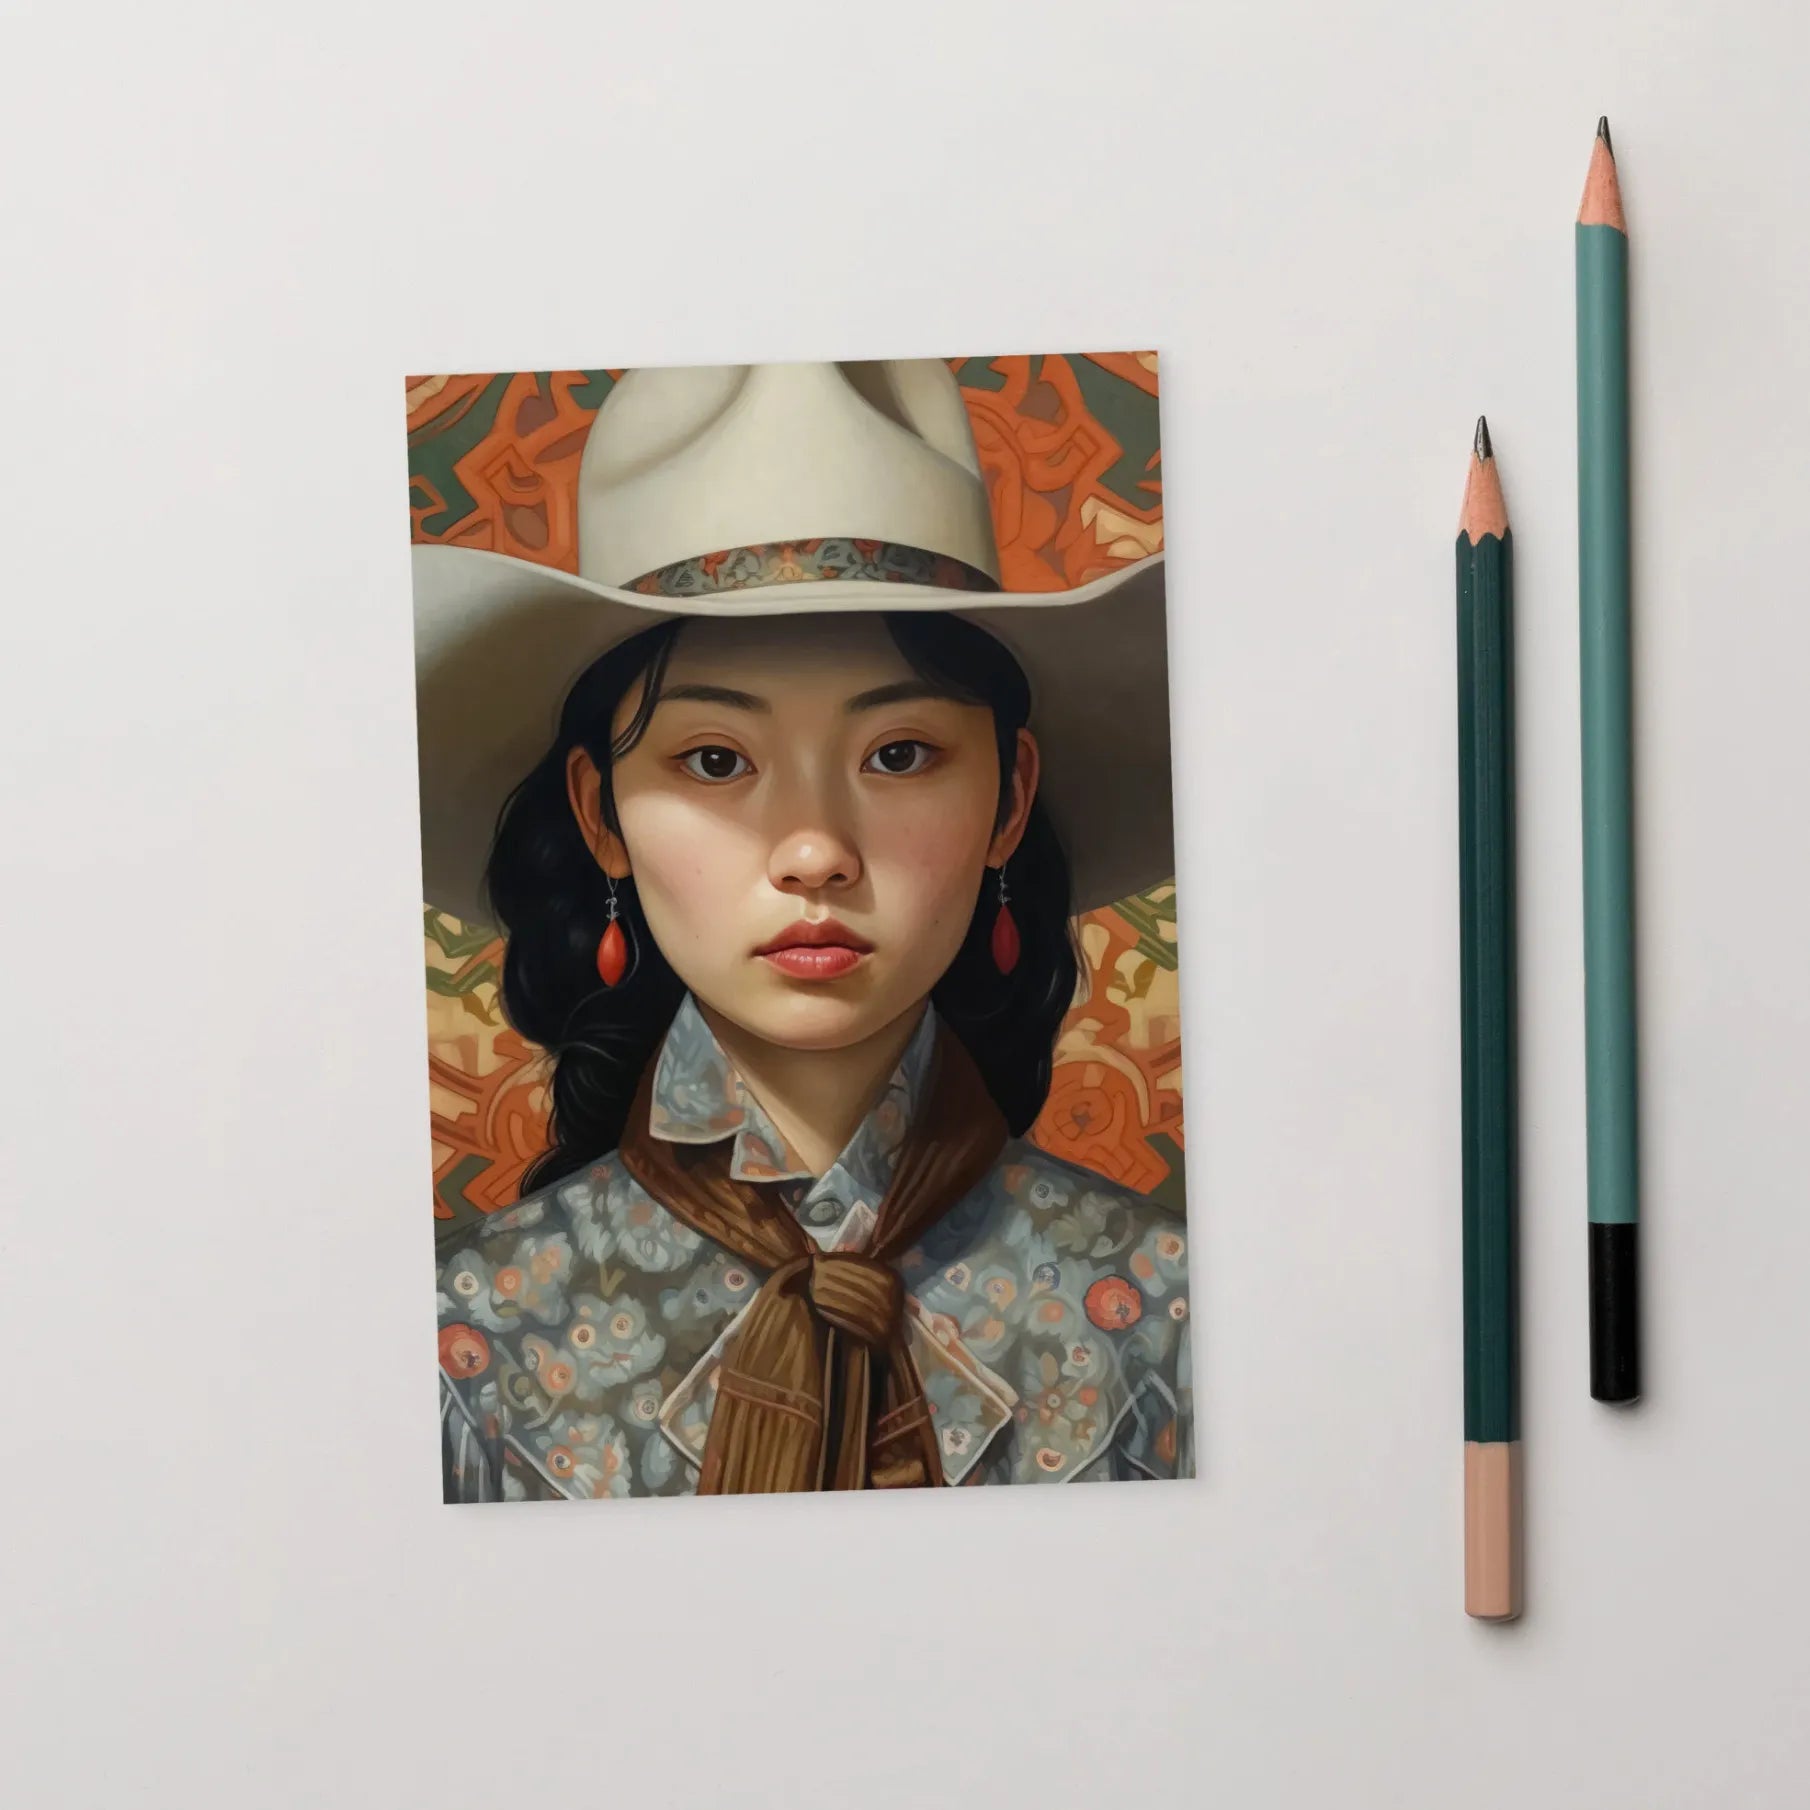 Zhi - Lesbian Chinese Cowgirl Art Print - Sapphic Asia Femme - 4’x6’ - Posters Prints & Visual Artwork - Aesthetic Art